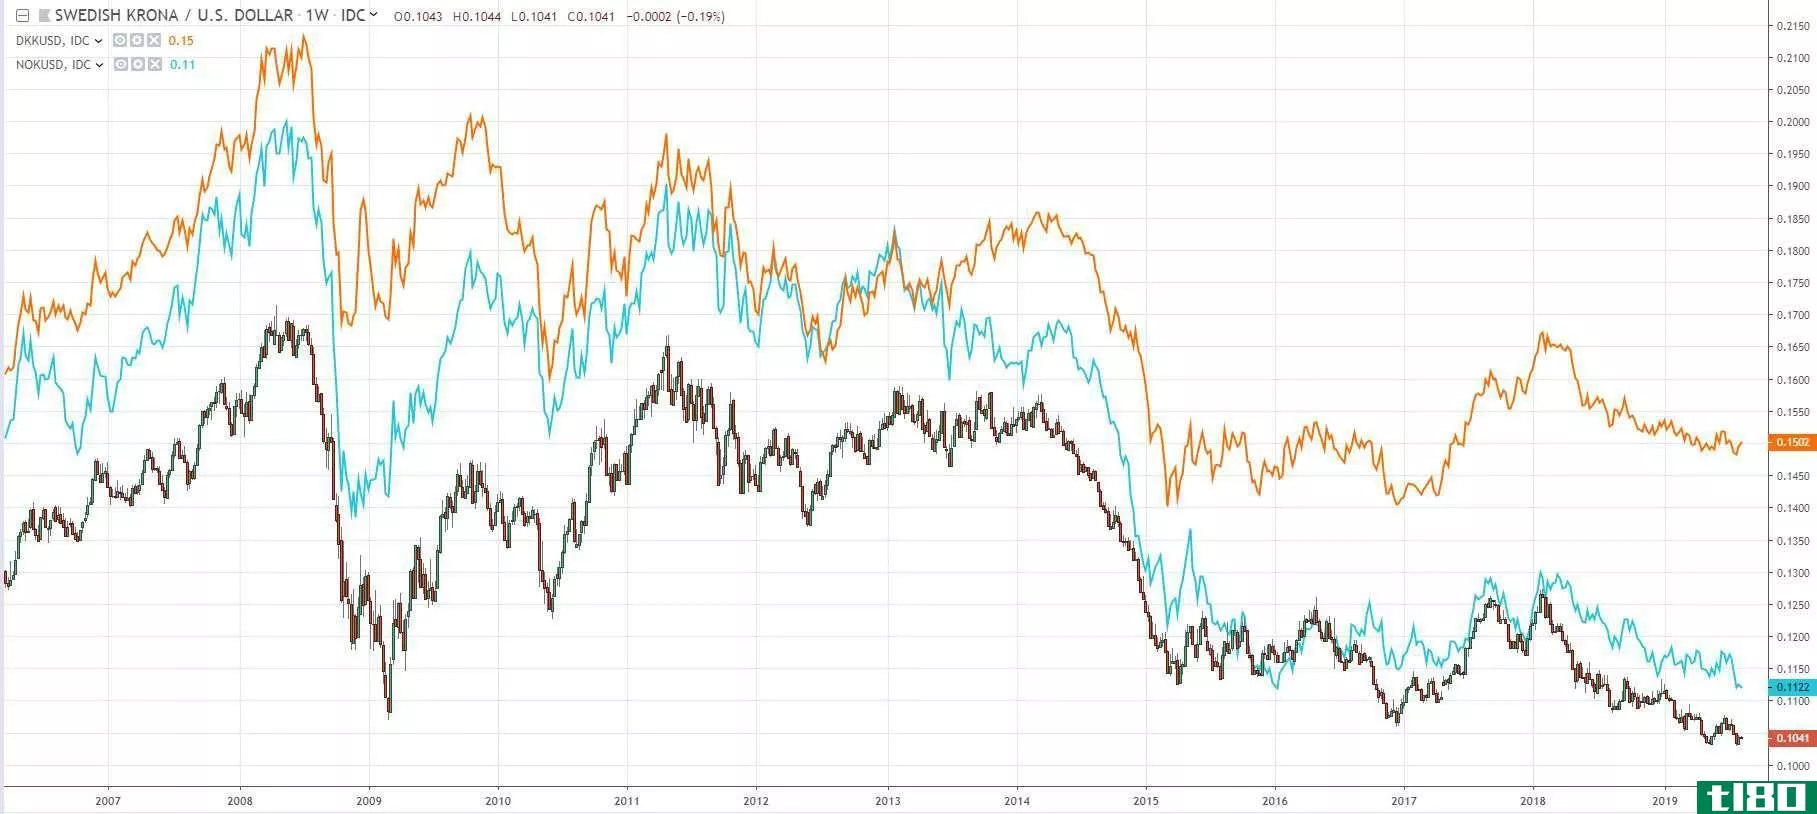 SKK, DKK, NOK charts versus USD